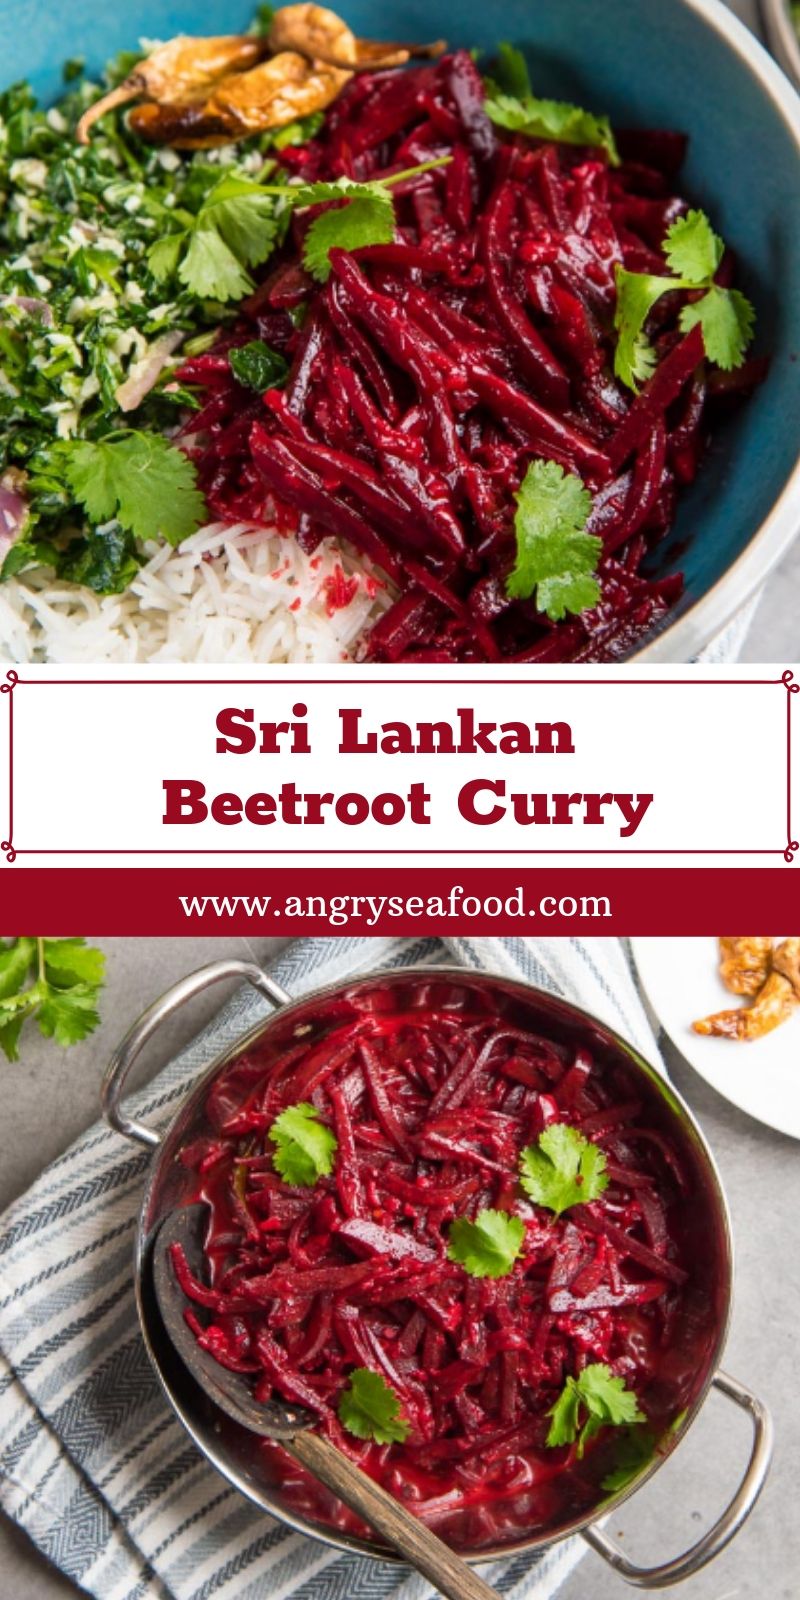 Sri Lankan Beetroot Curry